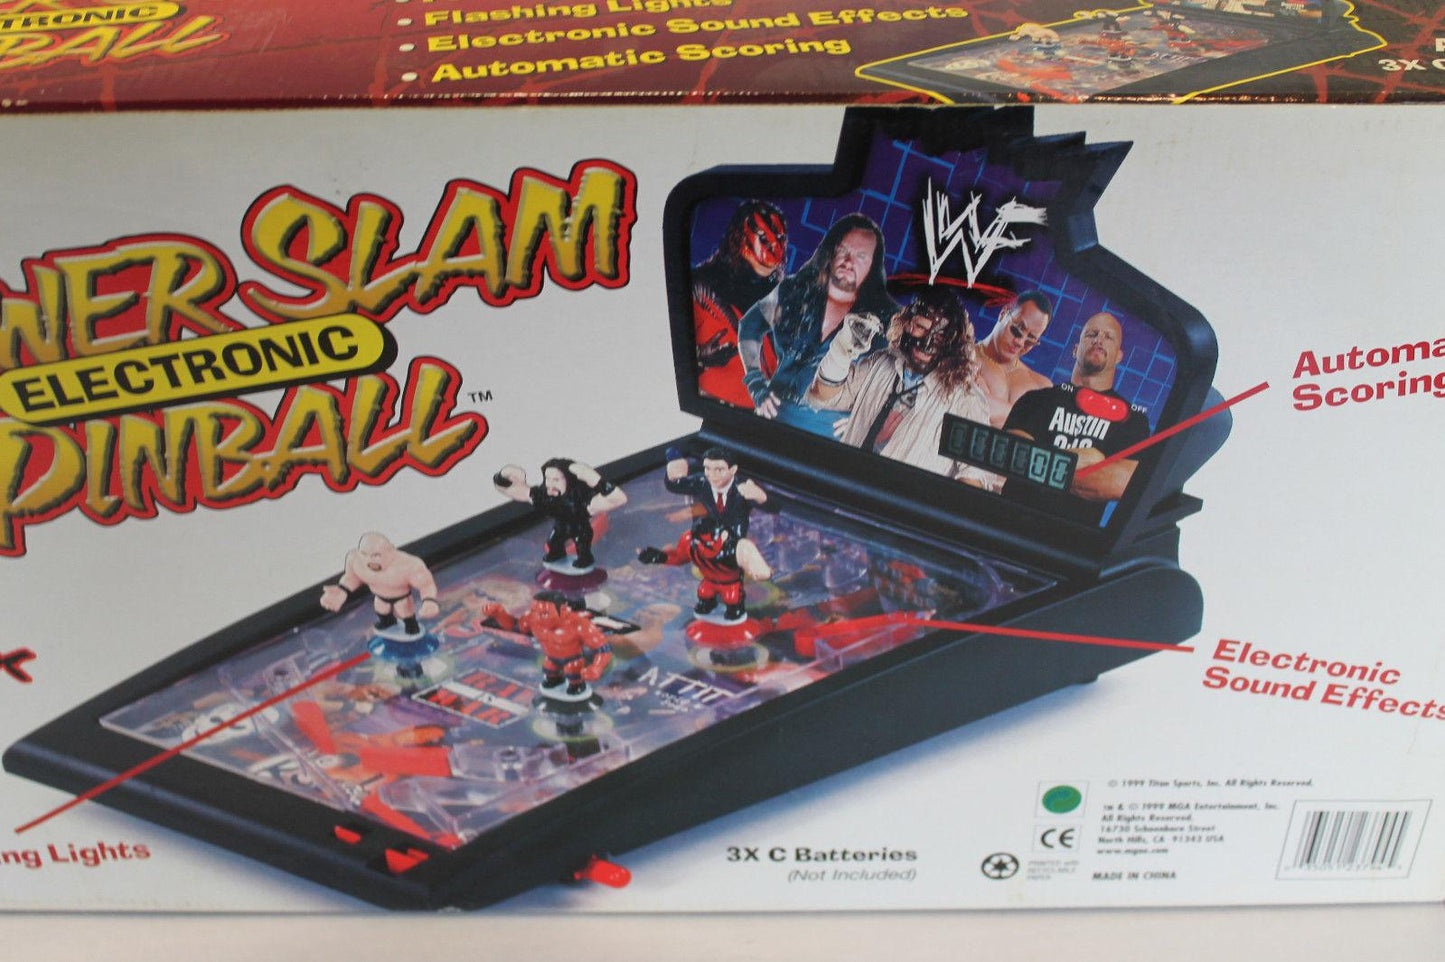 1999 WWF MGA Entertainment Power Slam Electronic Pinball [With The Rock, Vince McMahon, Stone Cold Steve Austin, Undertaker & Kane]